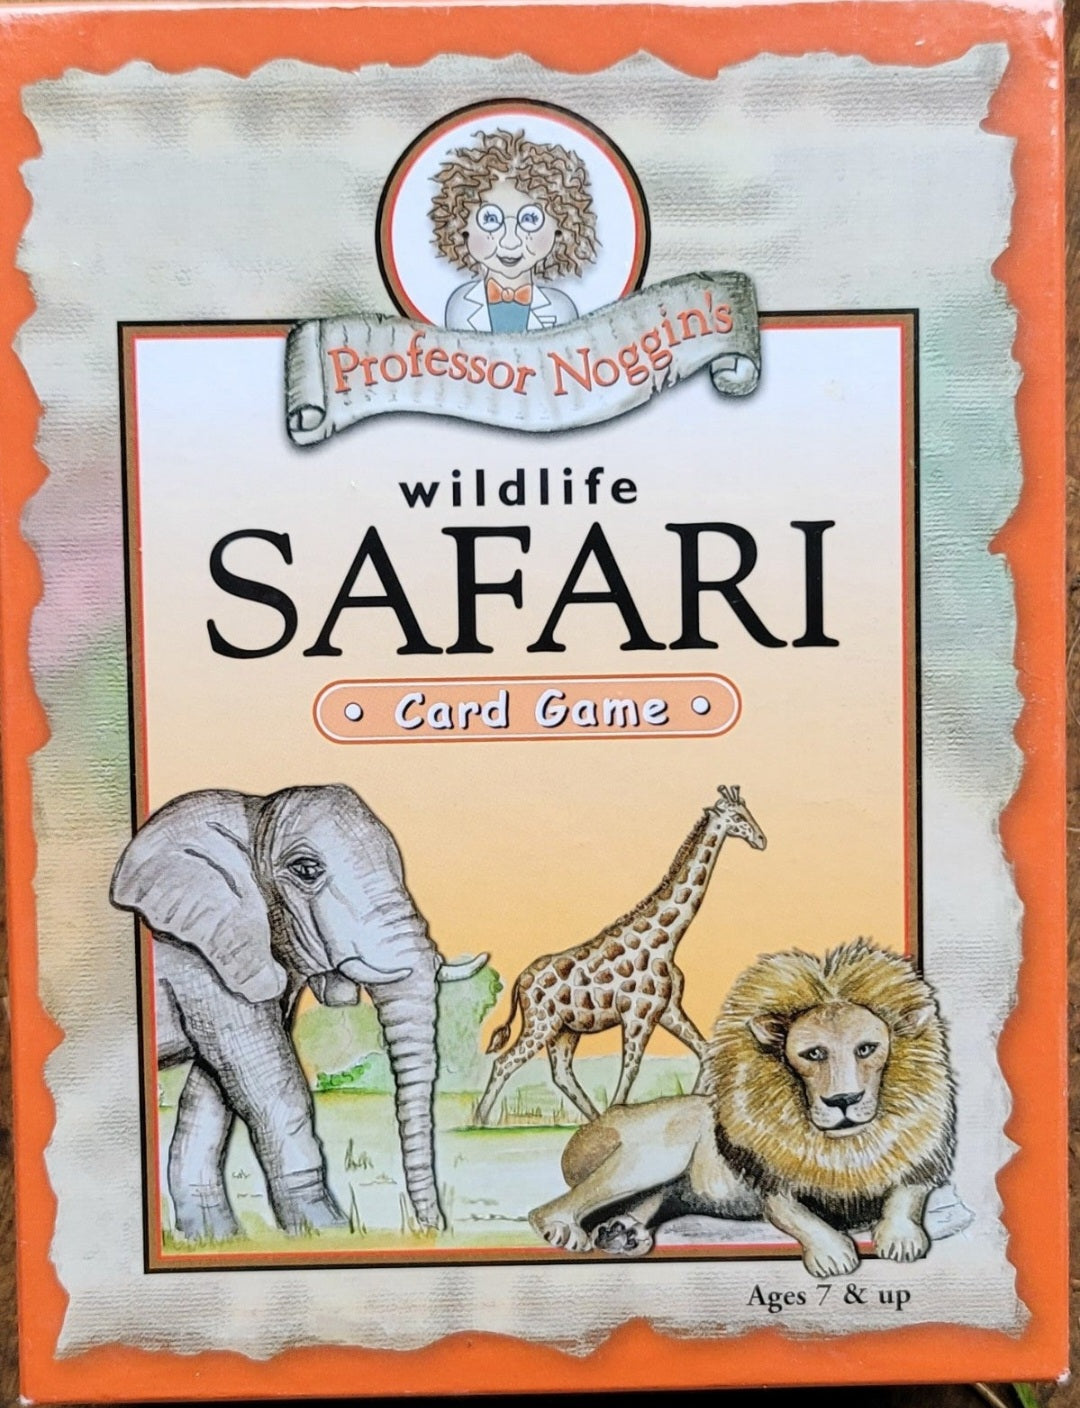 Wildlife Safari card game